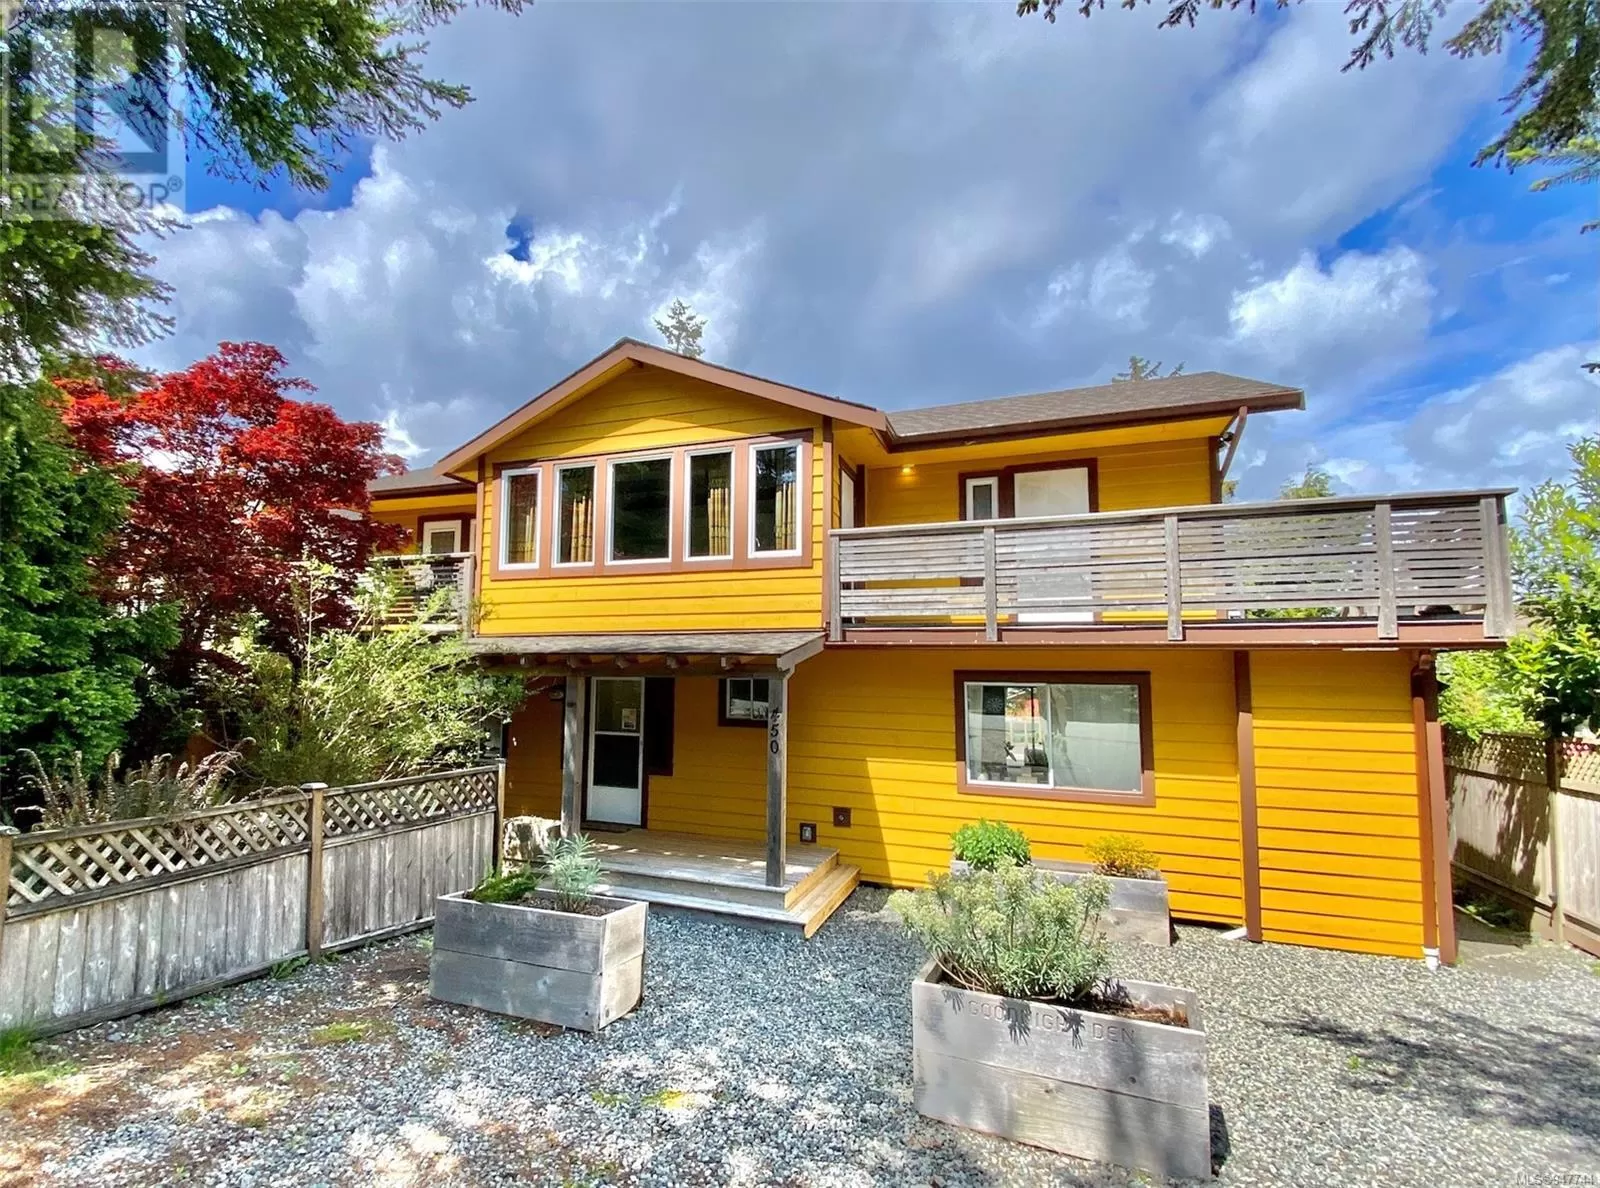 House for rent: 450 Neill St, Tofino, British Columbia V0R 2Z0